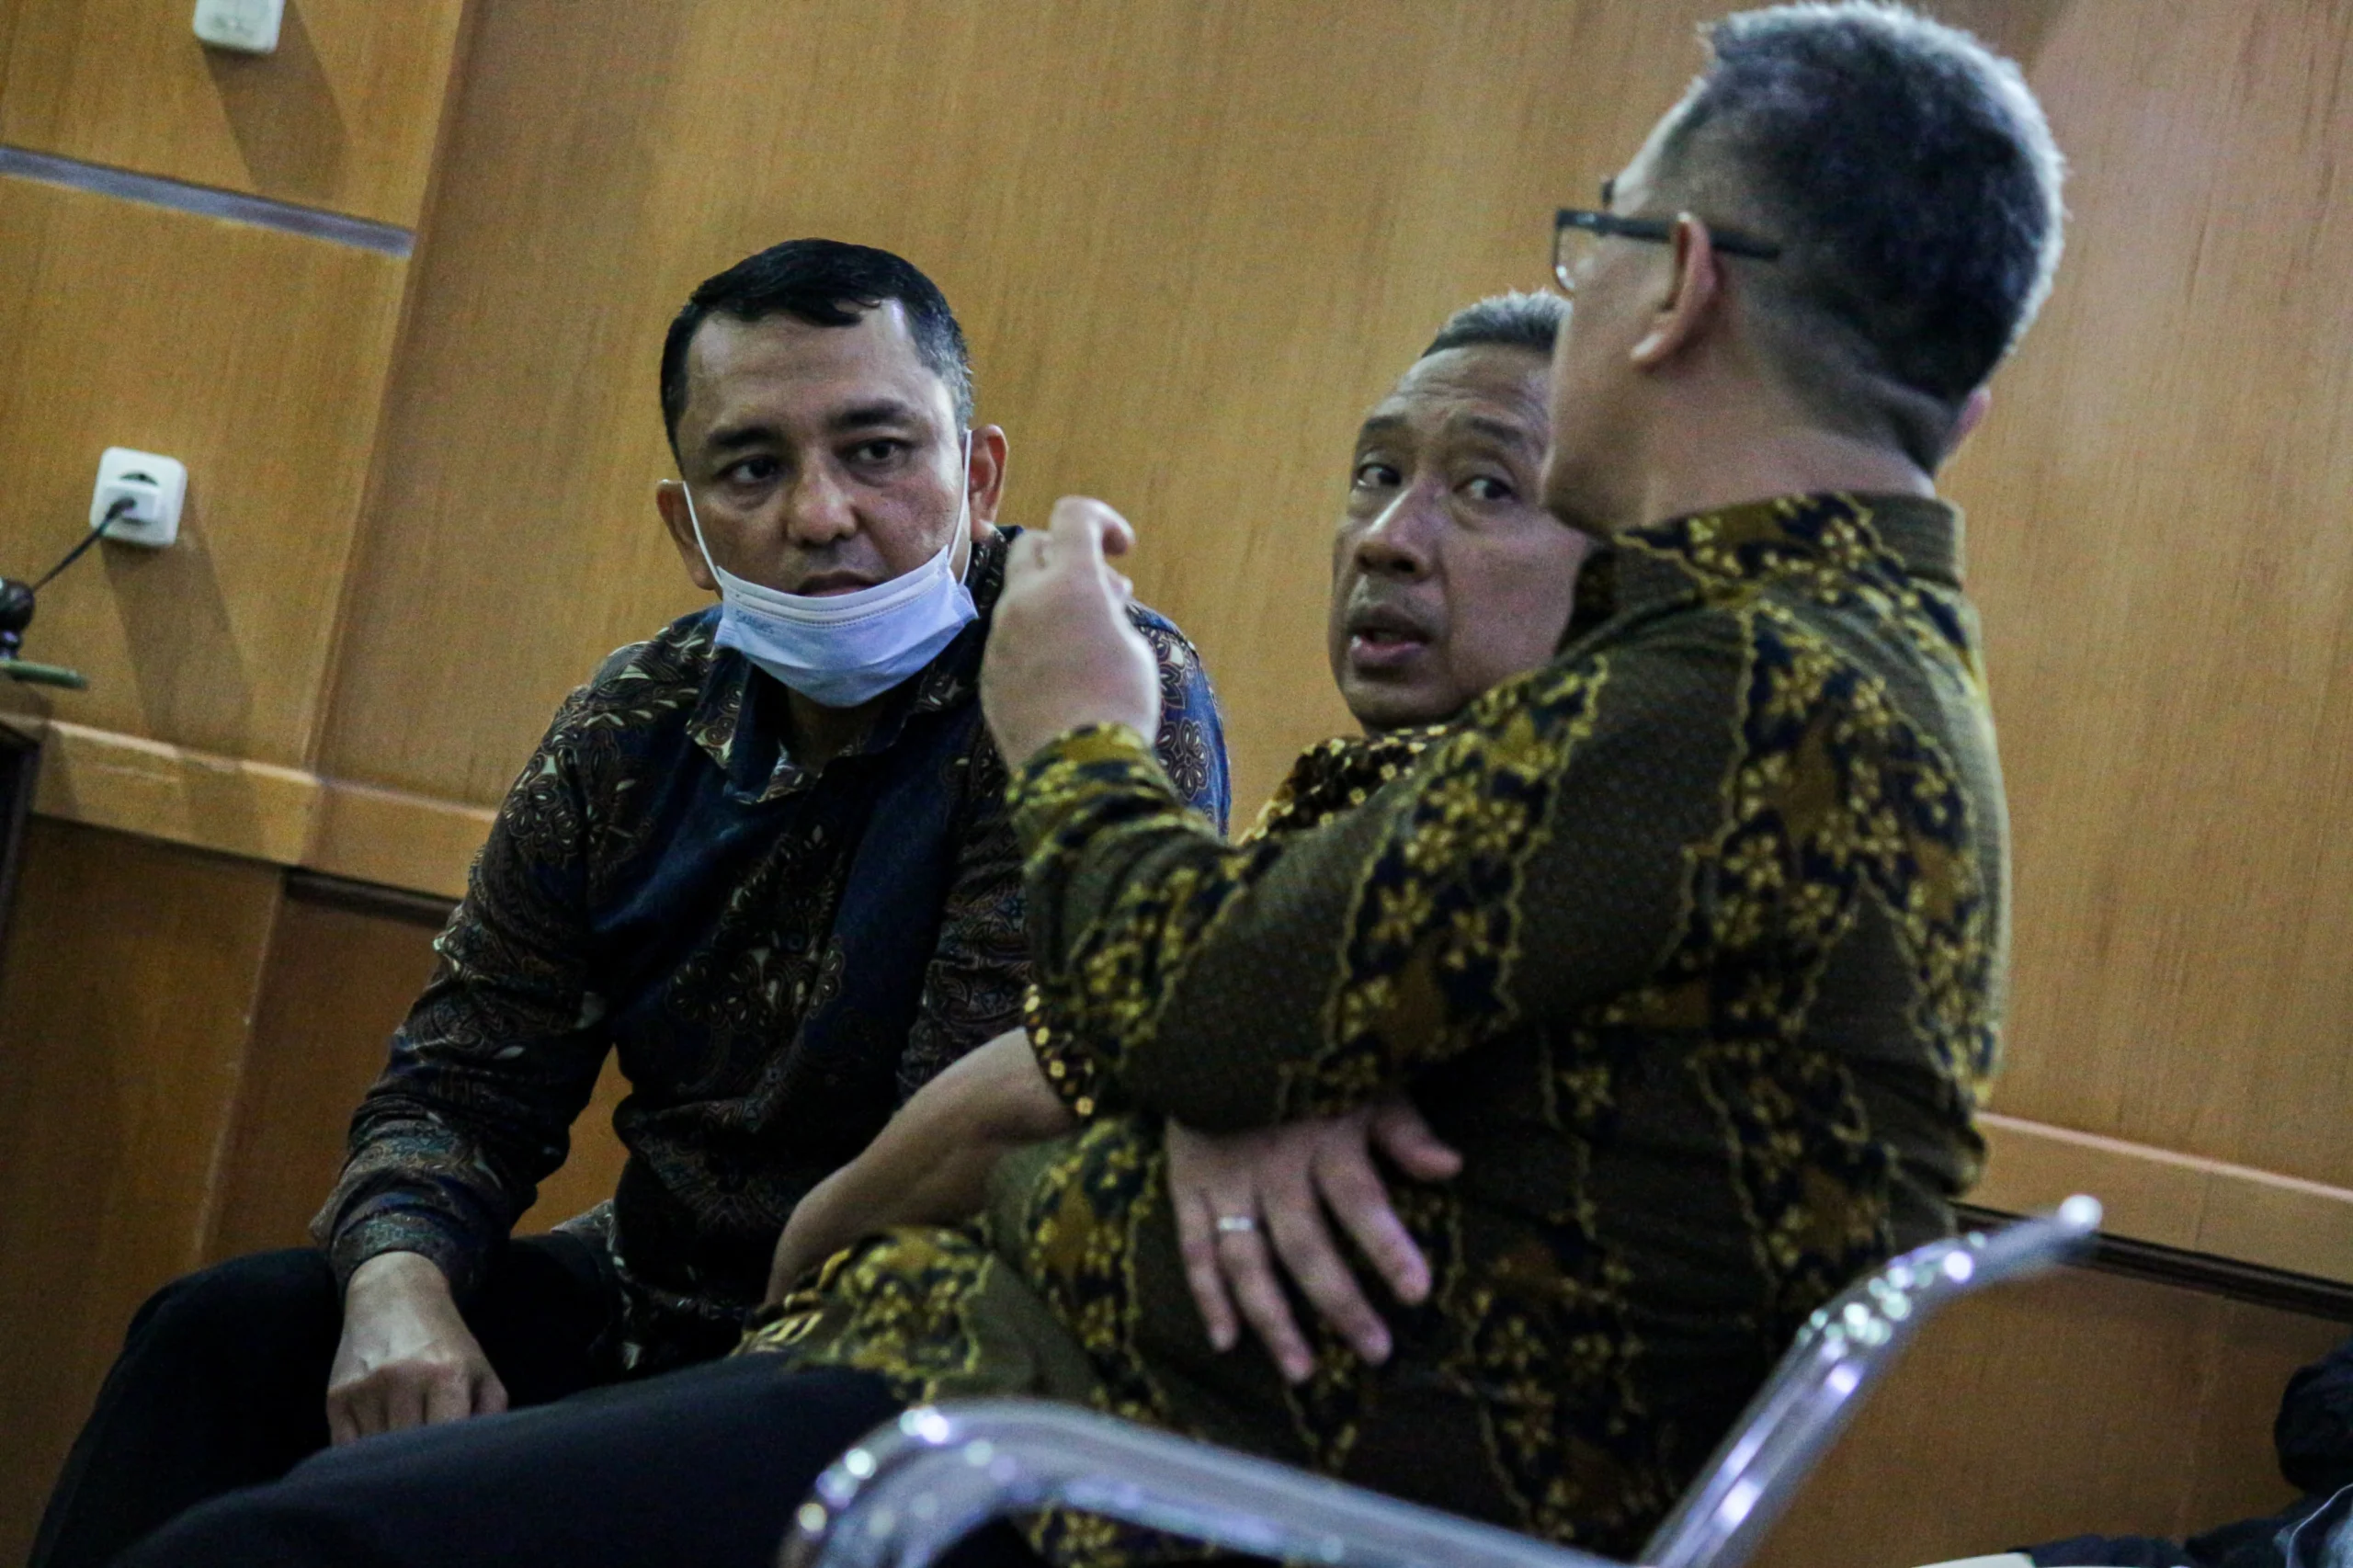 Ist. Tiga terdakwa kasus siap Proyek Bandung saat menunggu pembacaan vonis. Foto. Pandu muslim Jabar Ekspres.